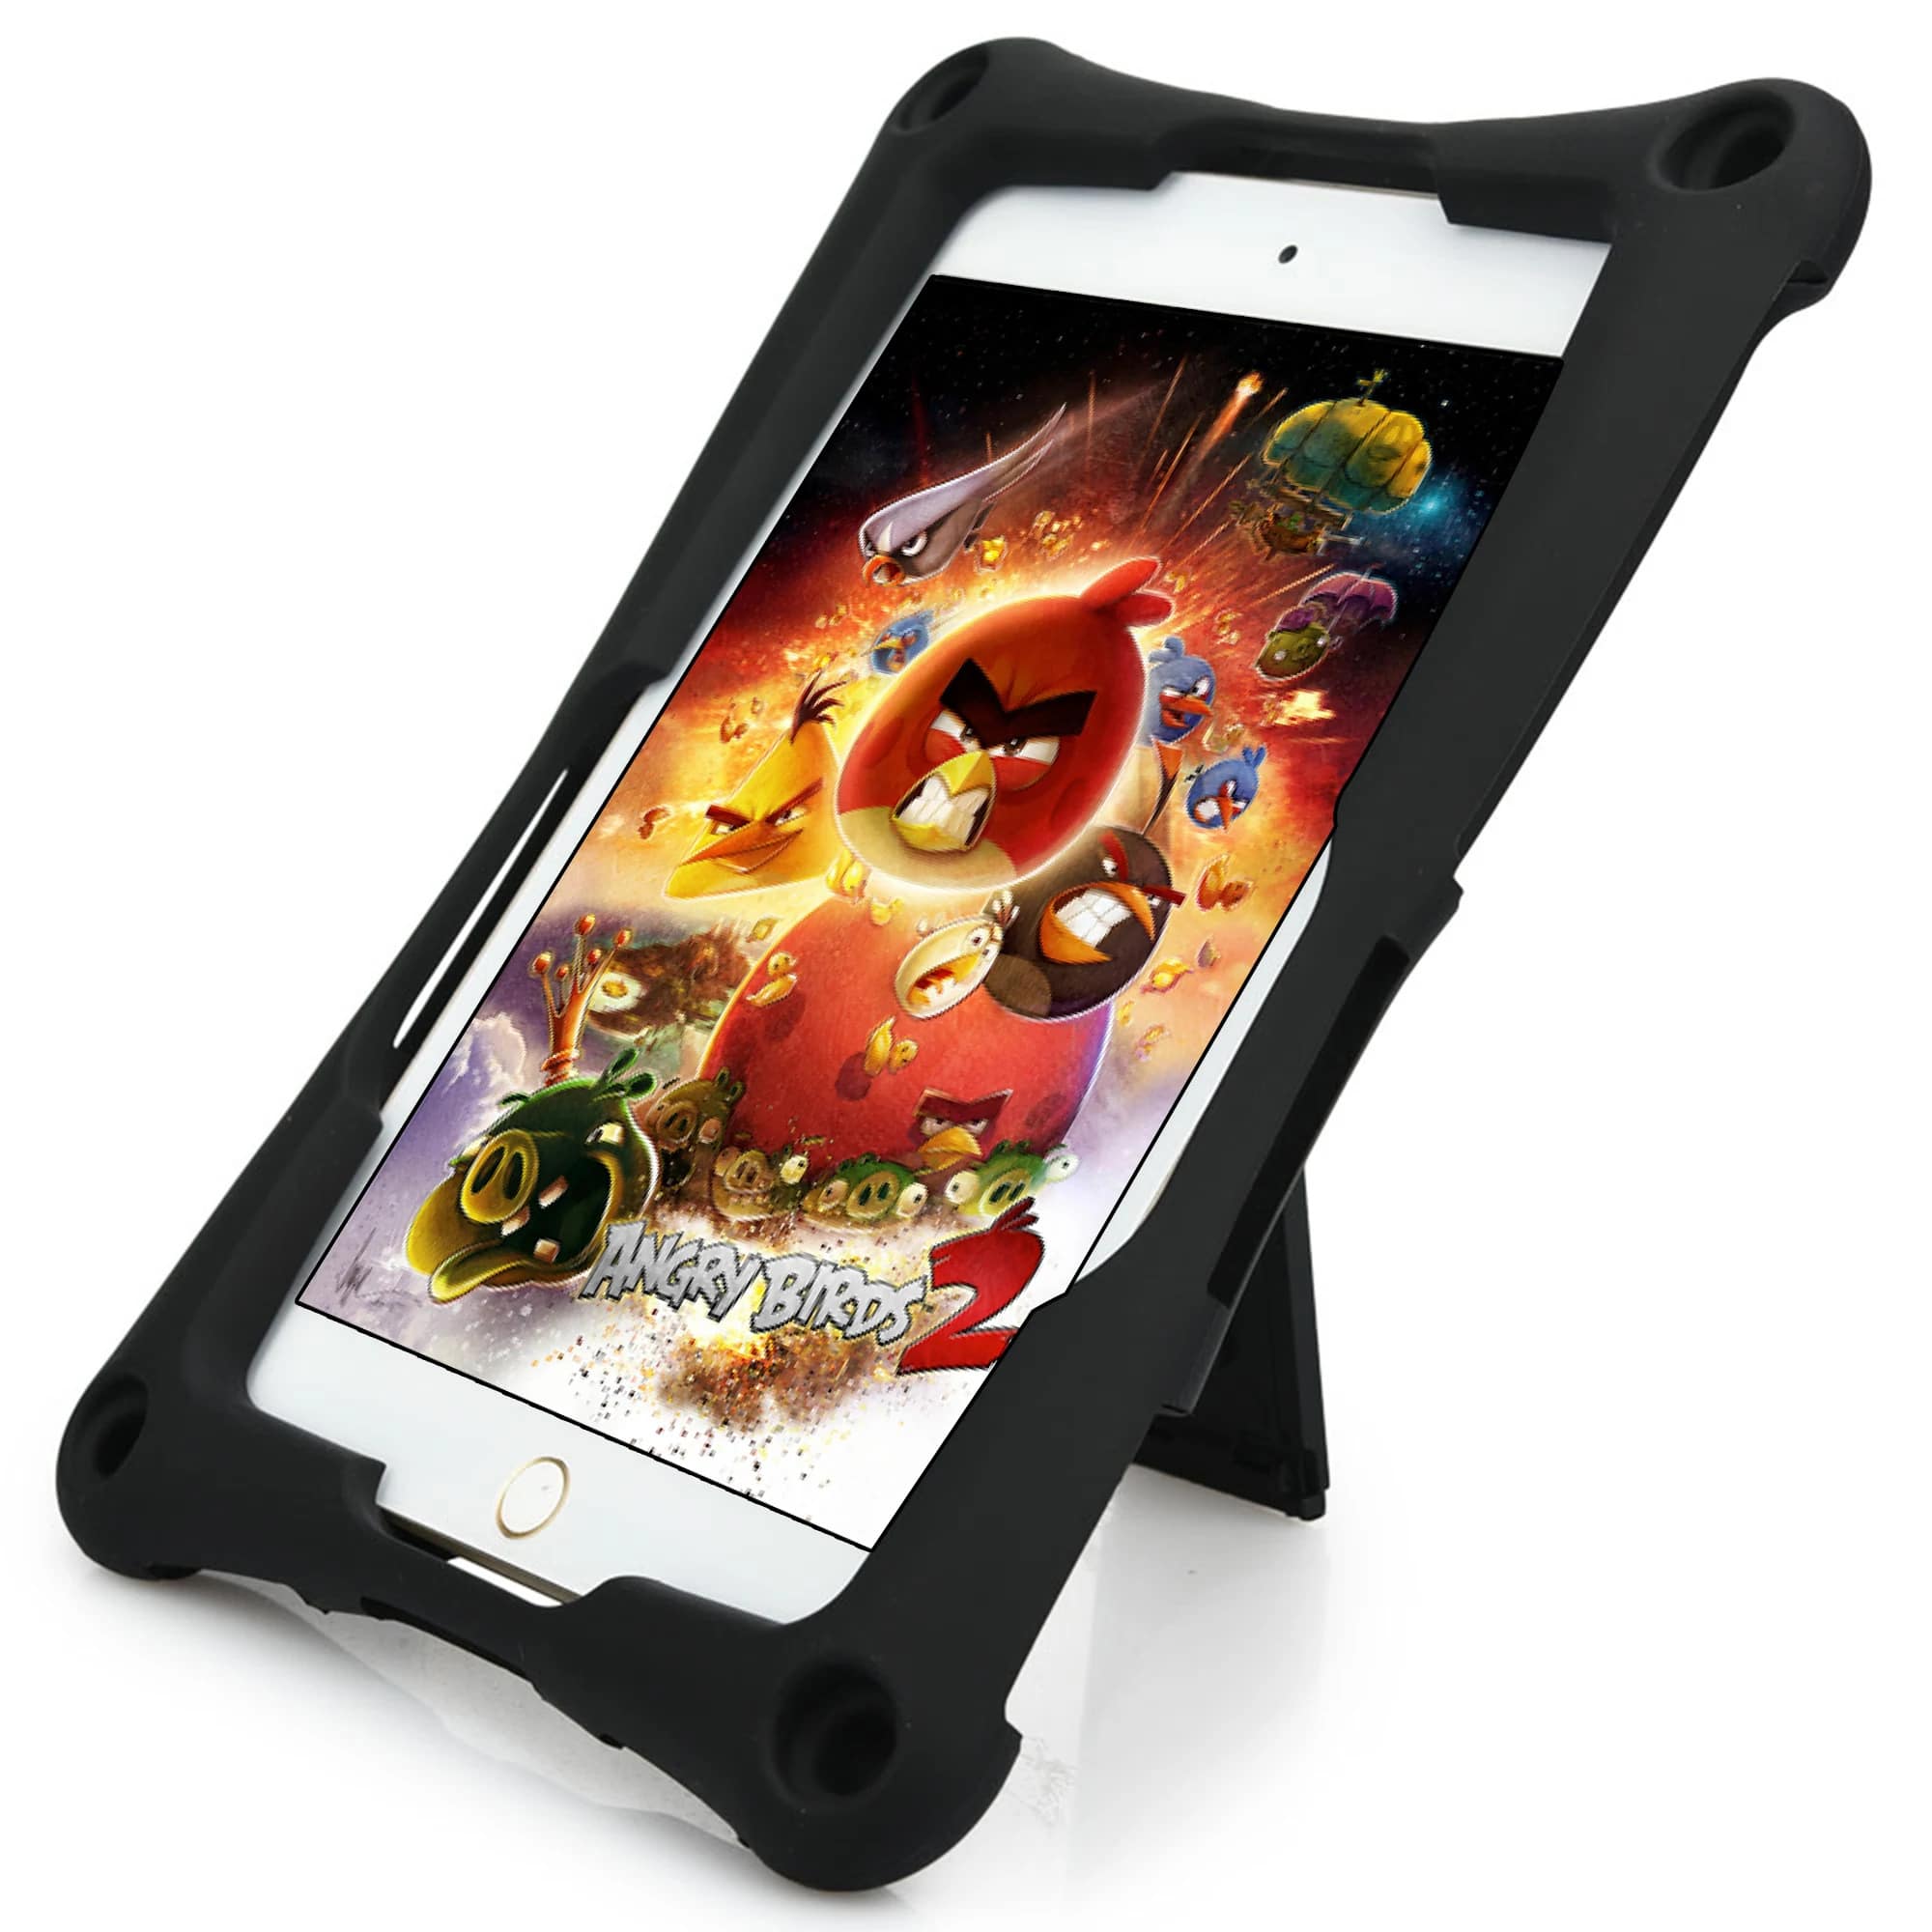 Cooper Magic Carry II PRO Tablet Case with Shoulder Strap - Cooper